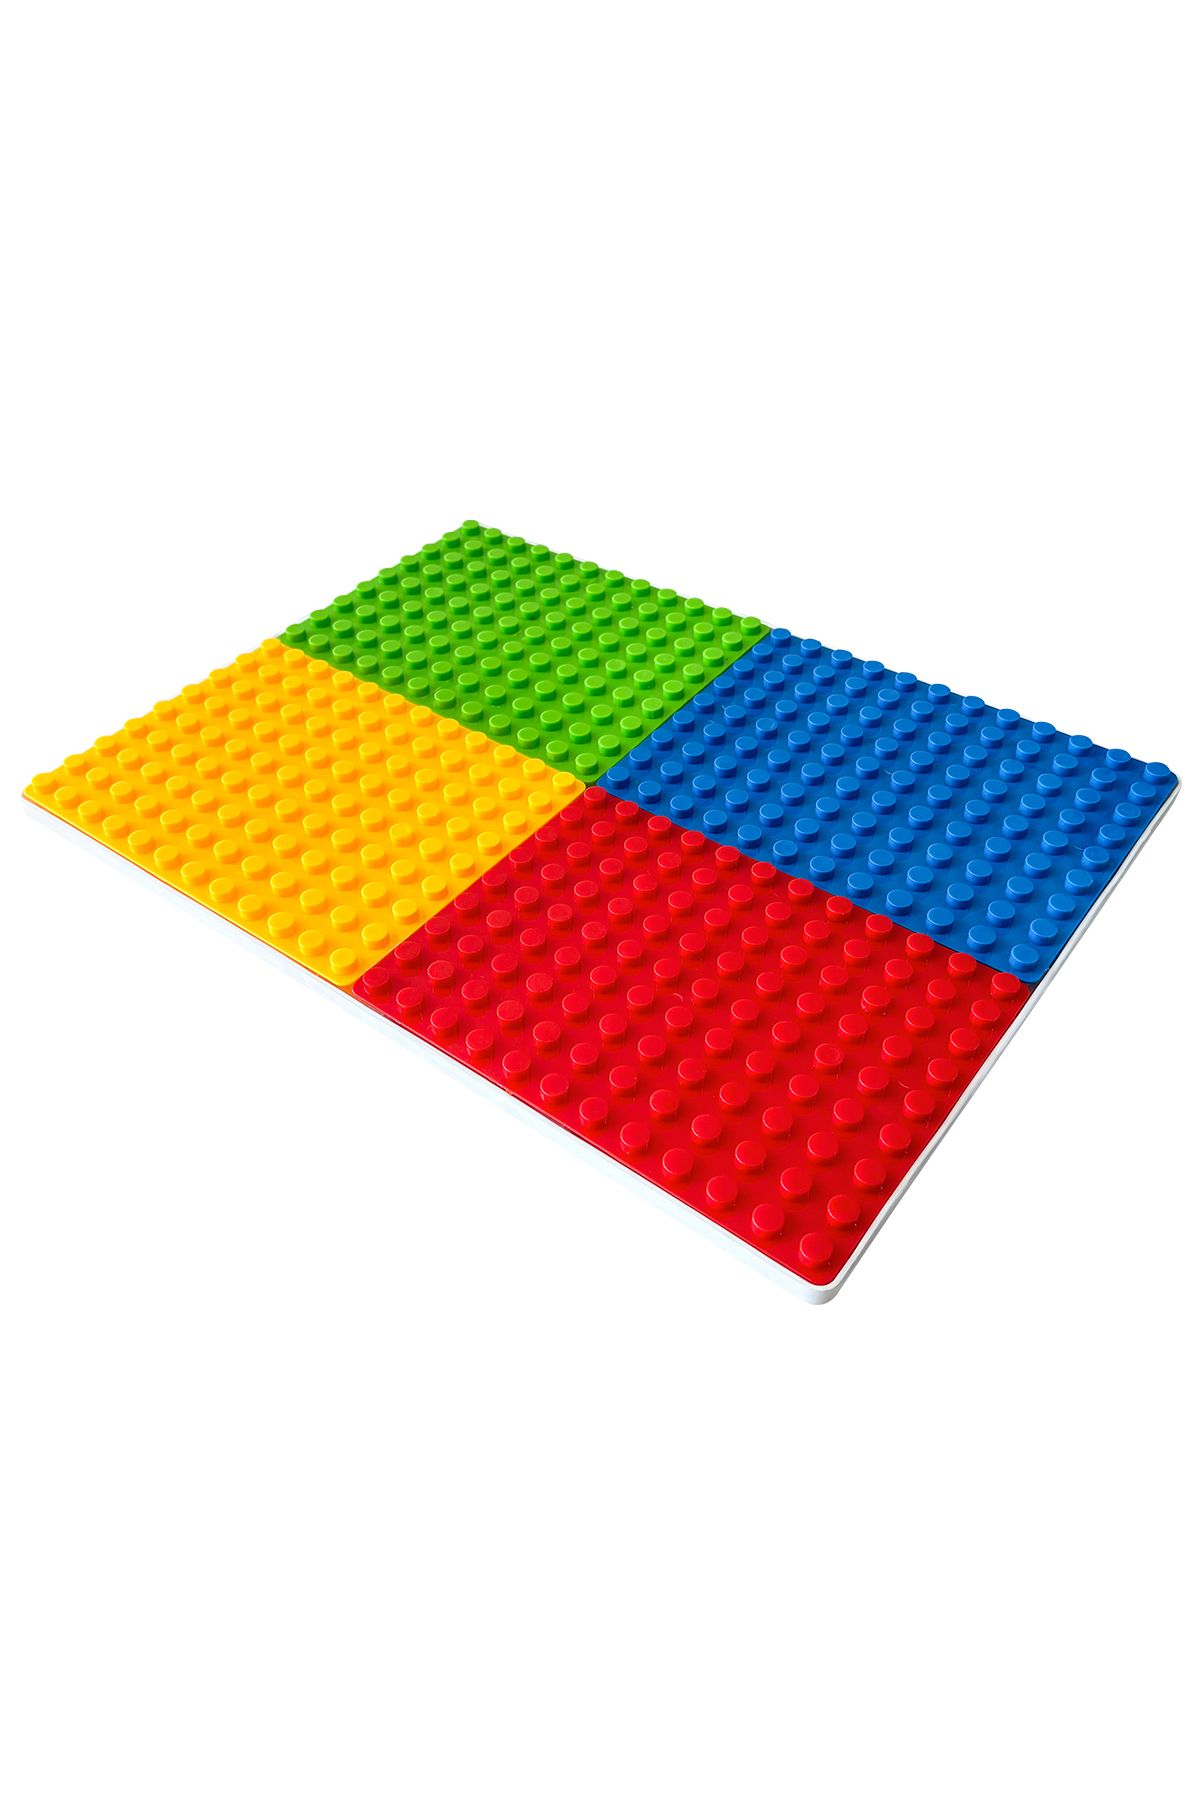 CREATİVE GAMES Legoduplouyumlu Tablalı Maxi Boy Zemin